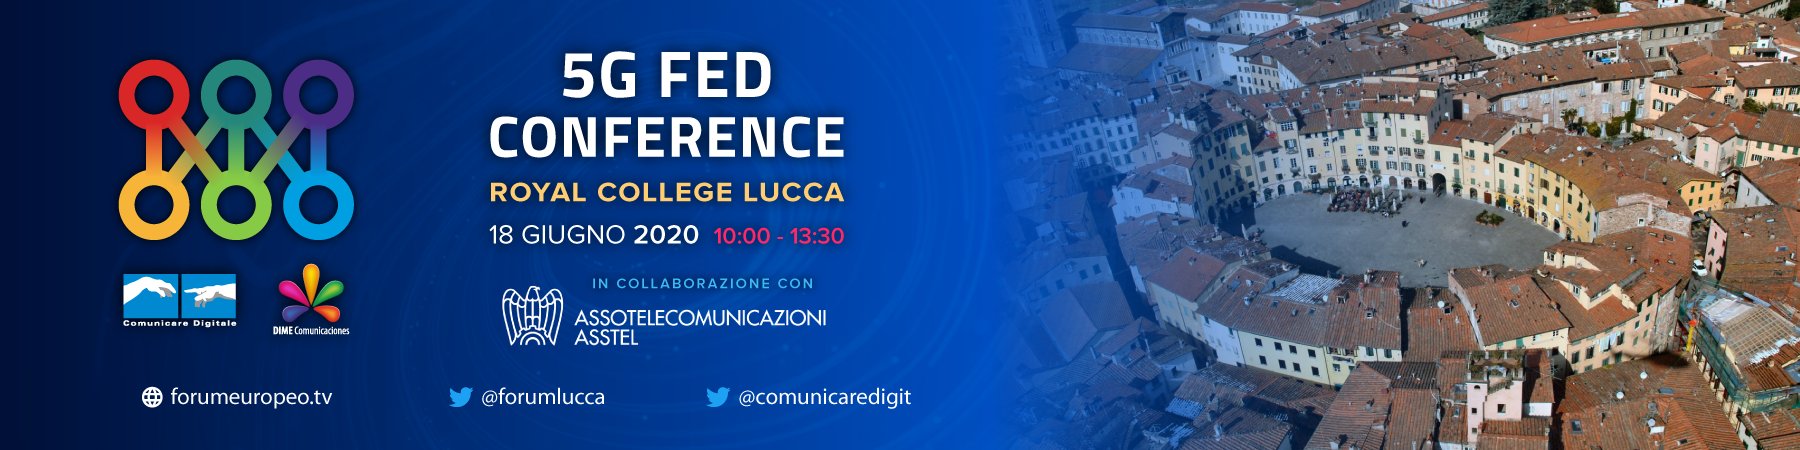 Foto - 5G FED Conference al 17esimo Forum Europeo Digitale Lucca 2020